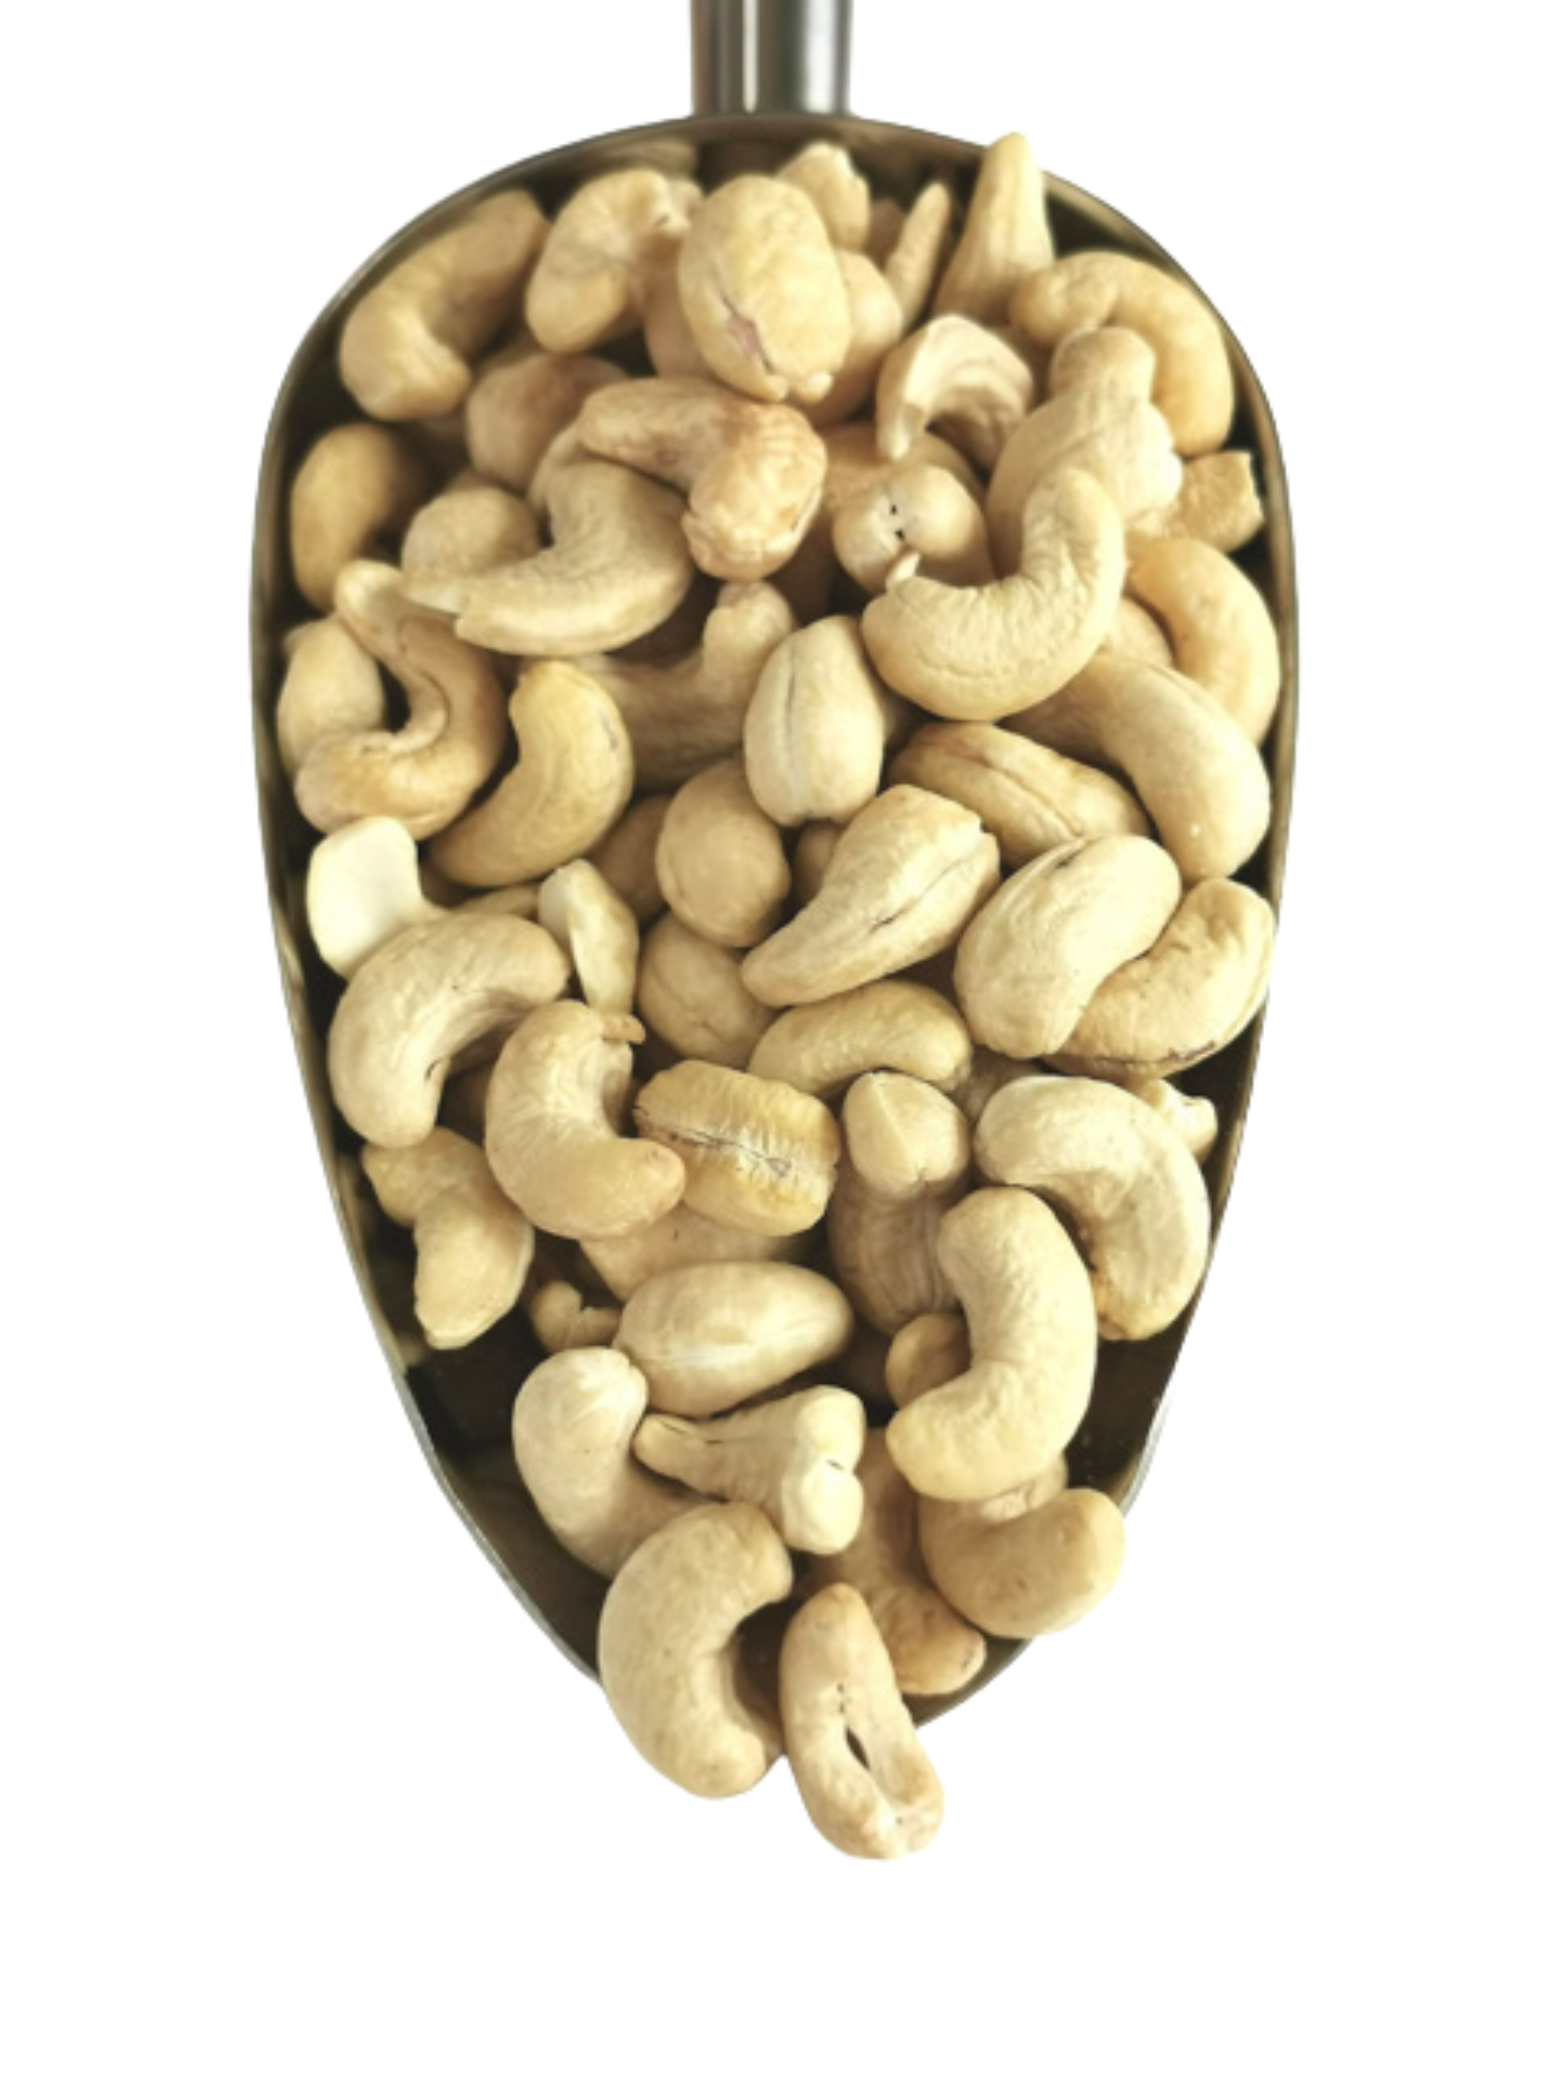 Cashew nuts - whole / raw